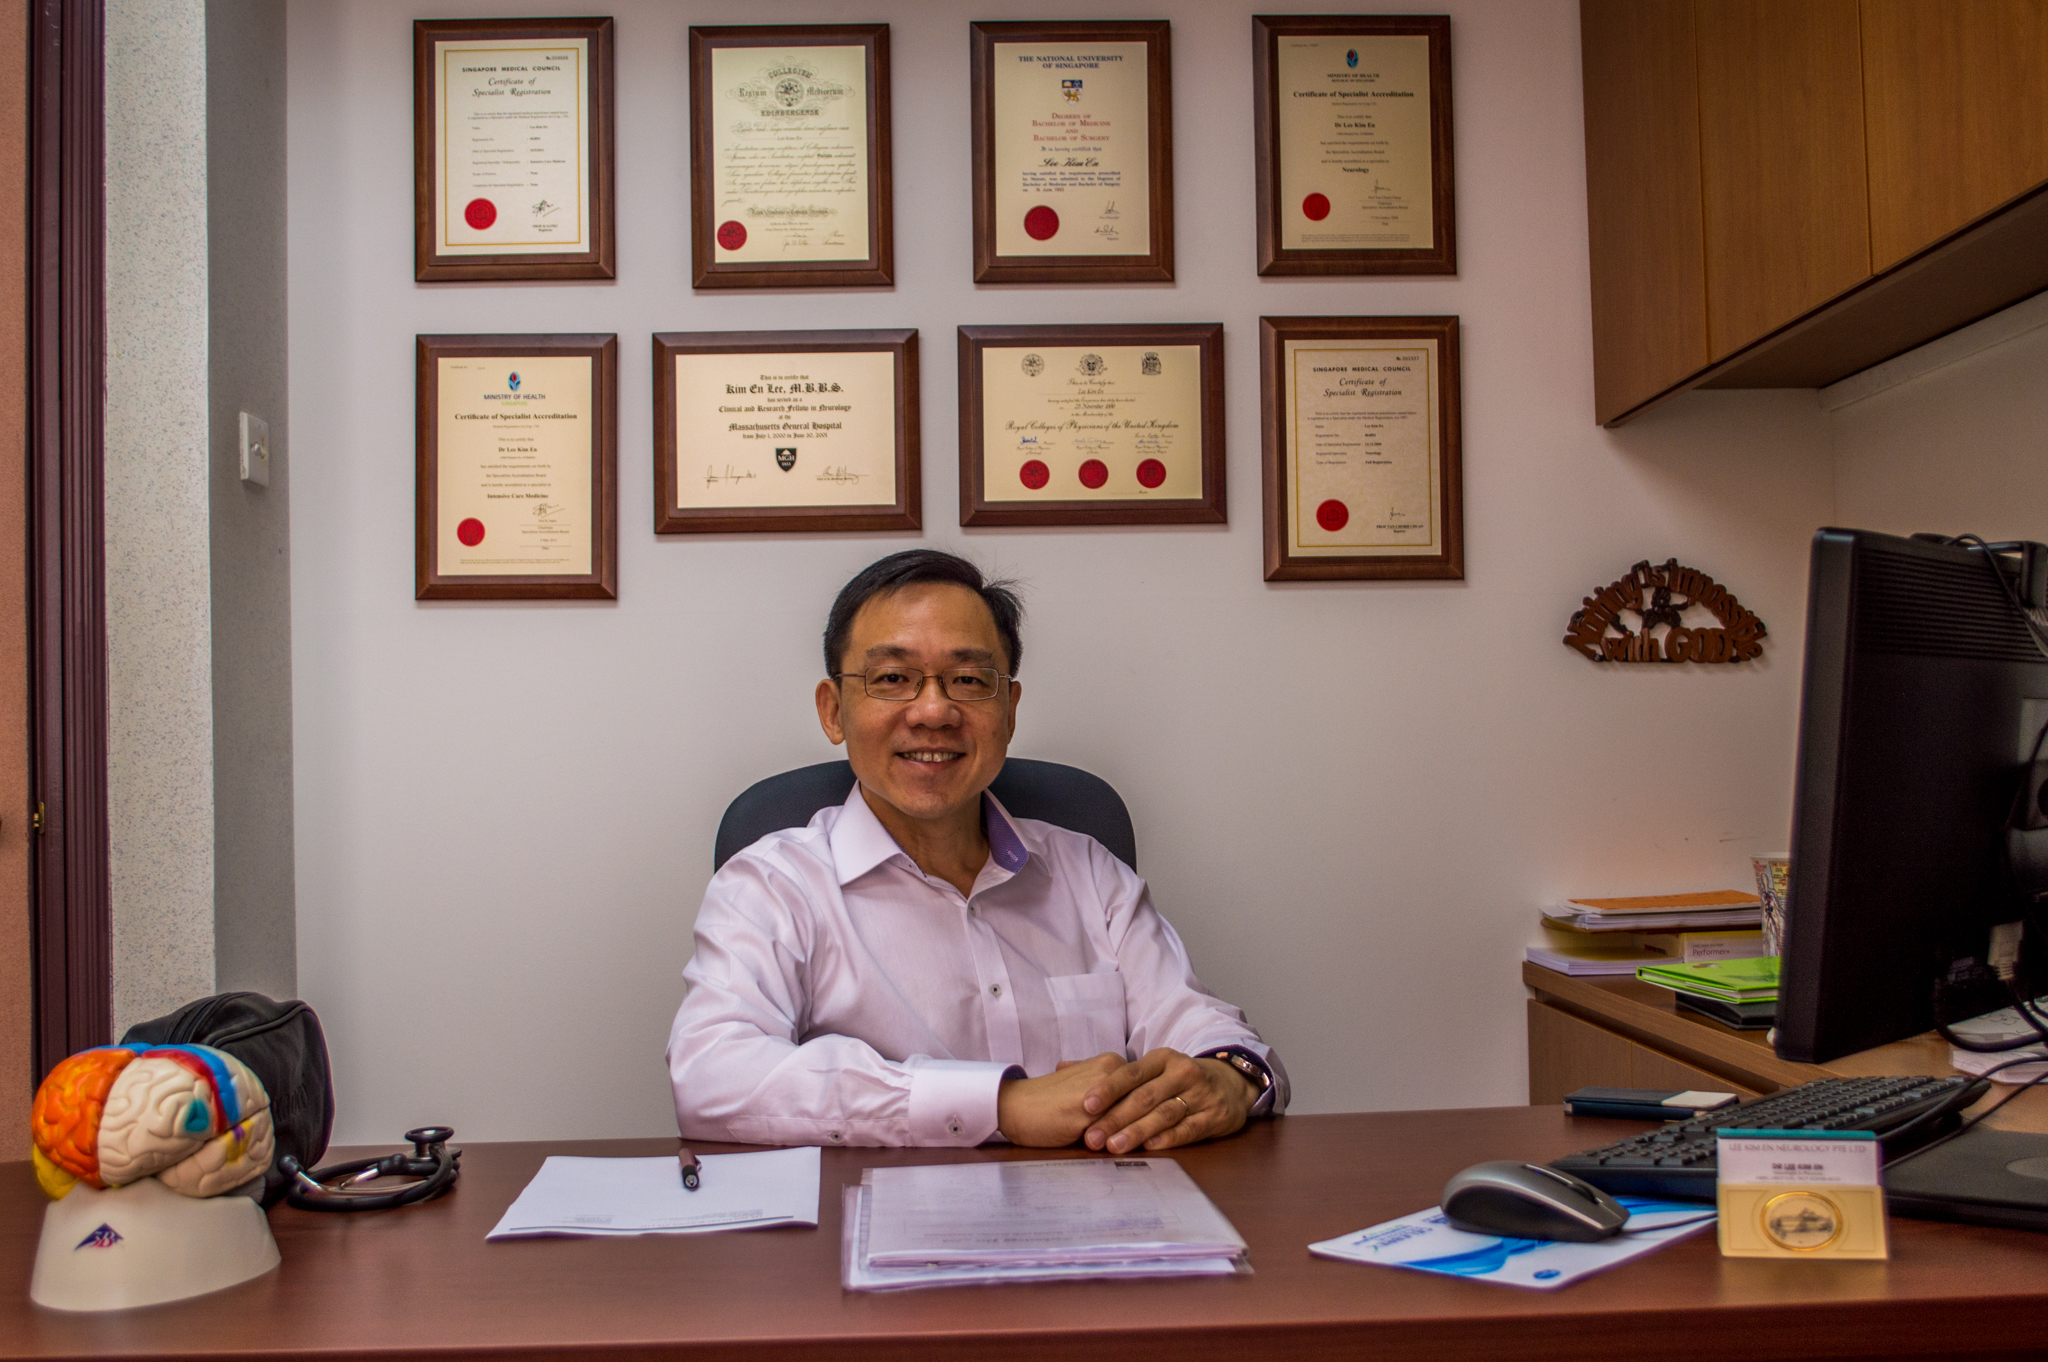 Gallery – Dr Lee Kim En Neurology Singapore